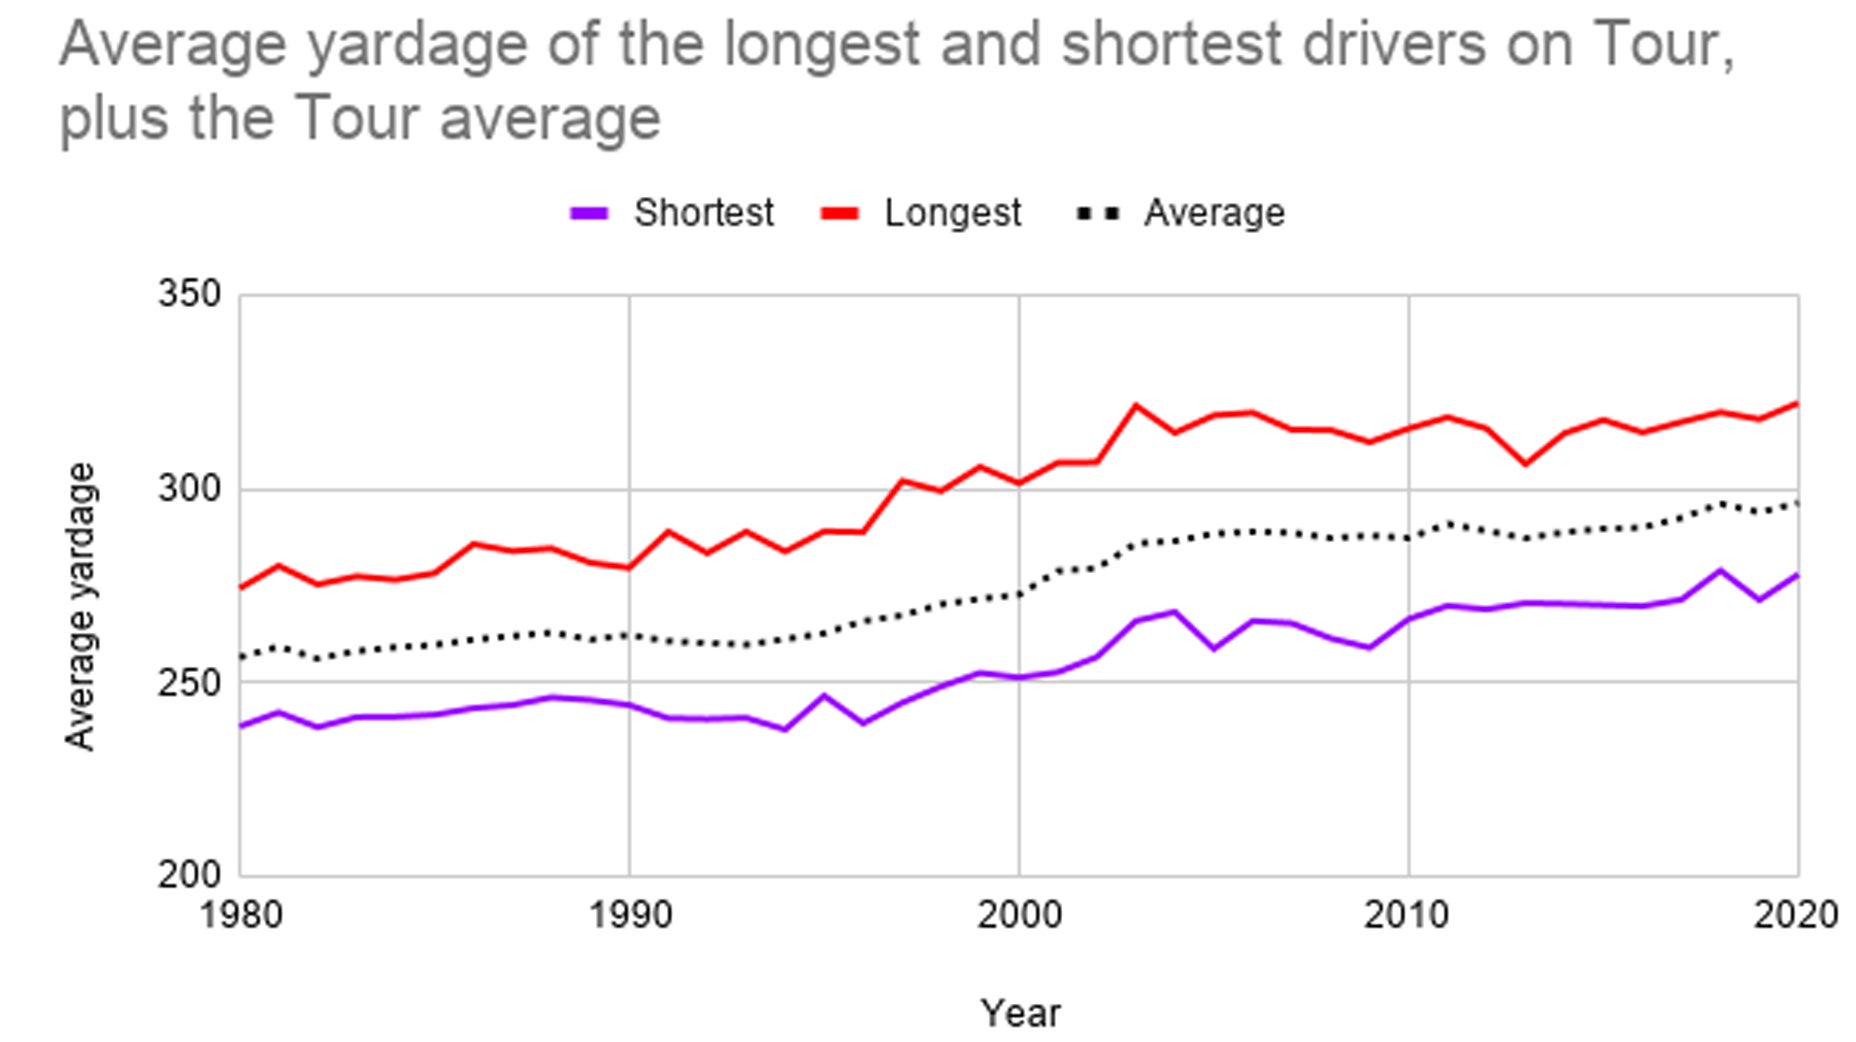 Average yardage of the longest and shortest drivers on Tour plus the Tour average